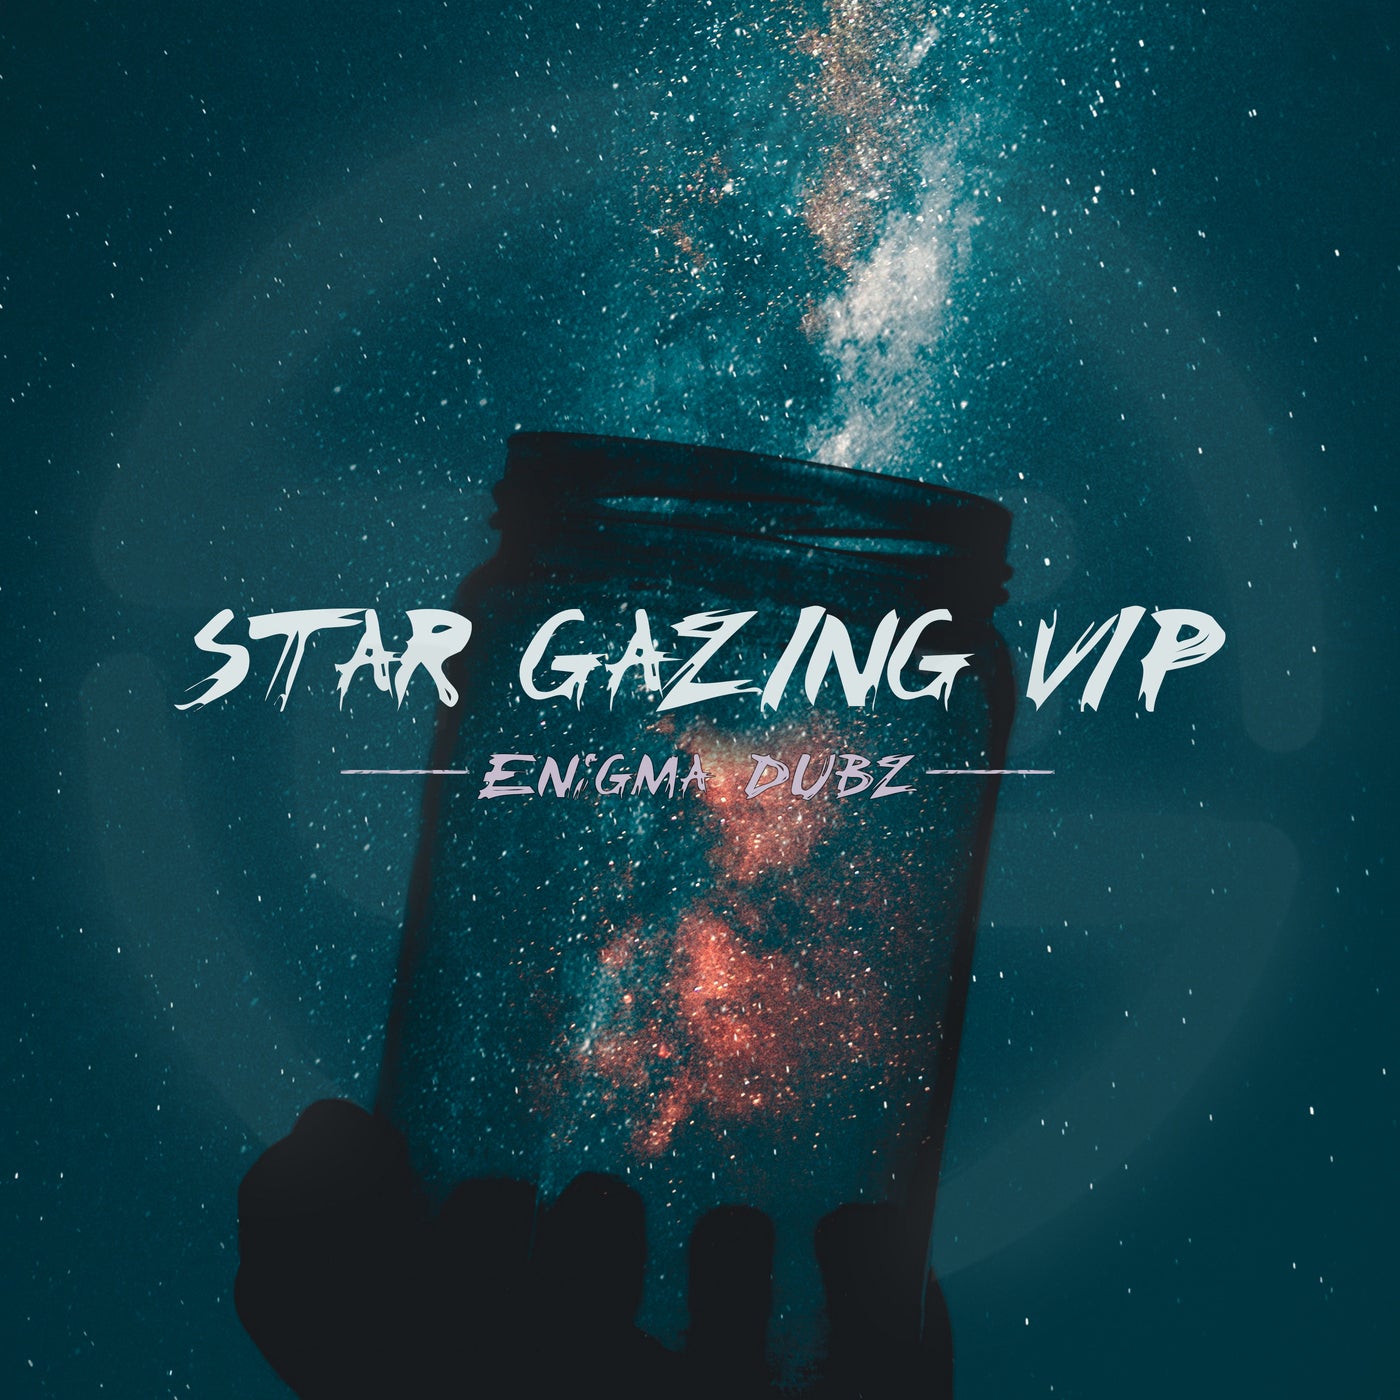 Star Gazing (VIP)